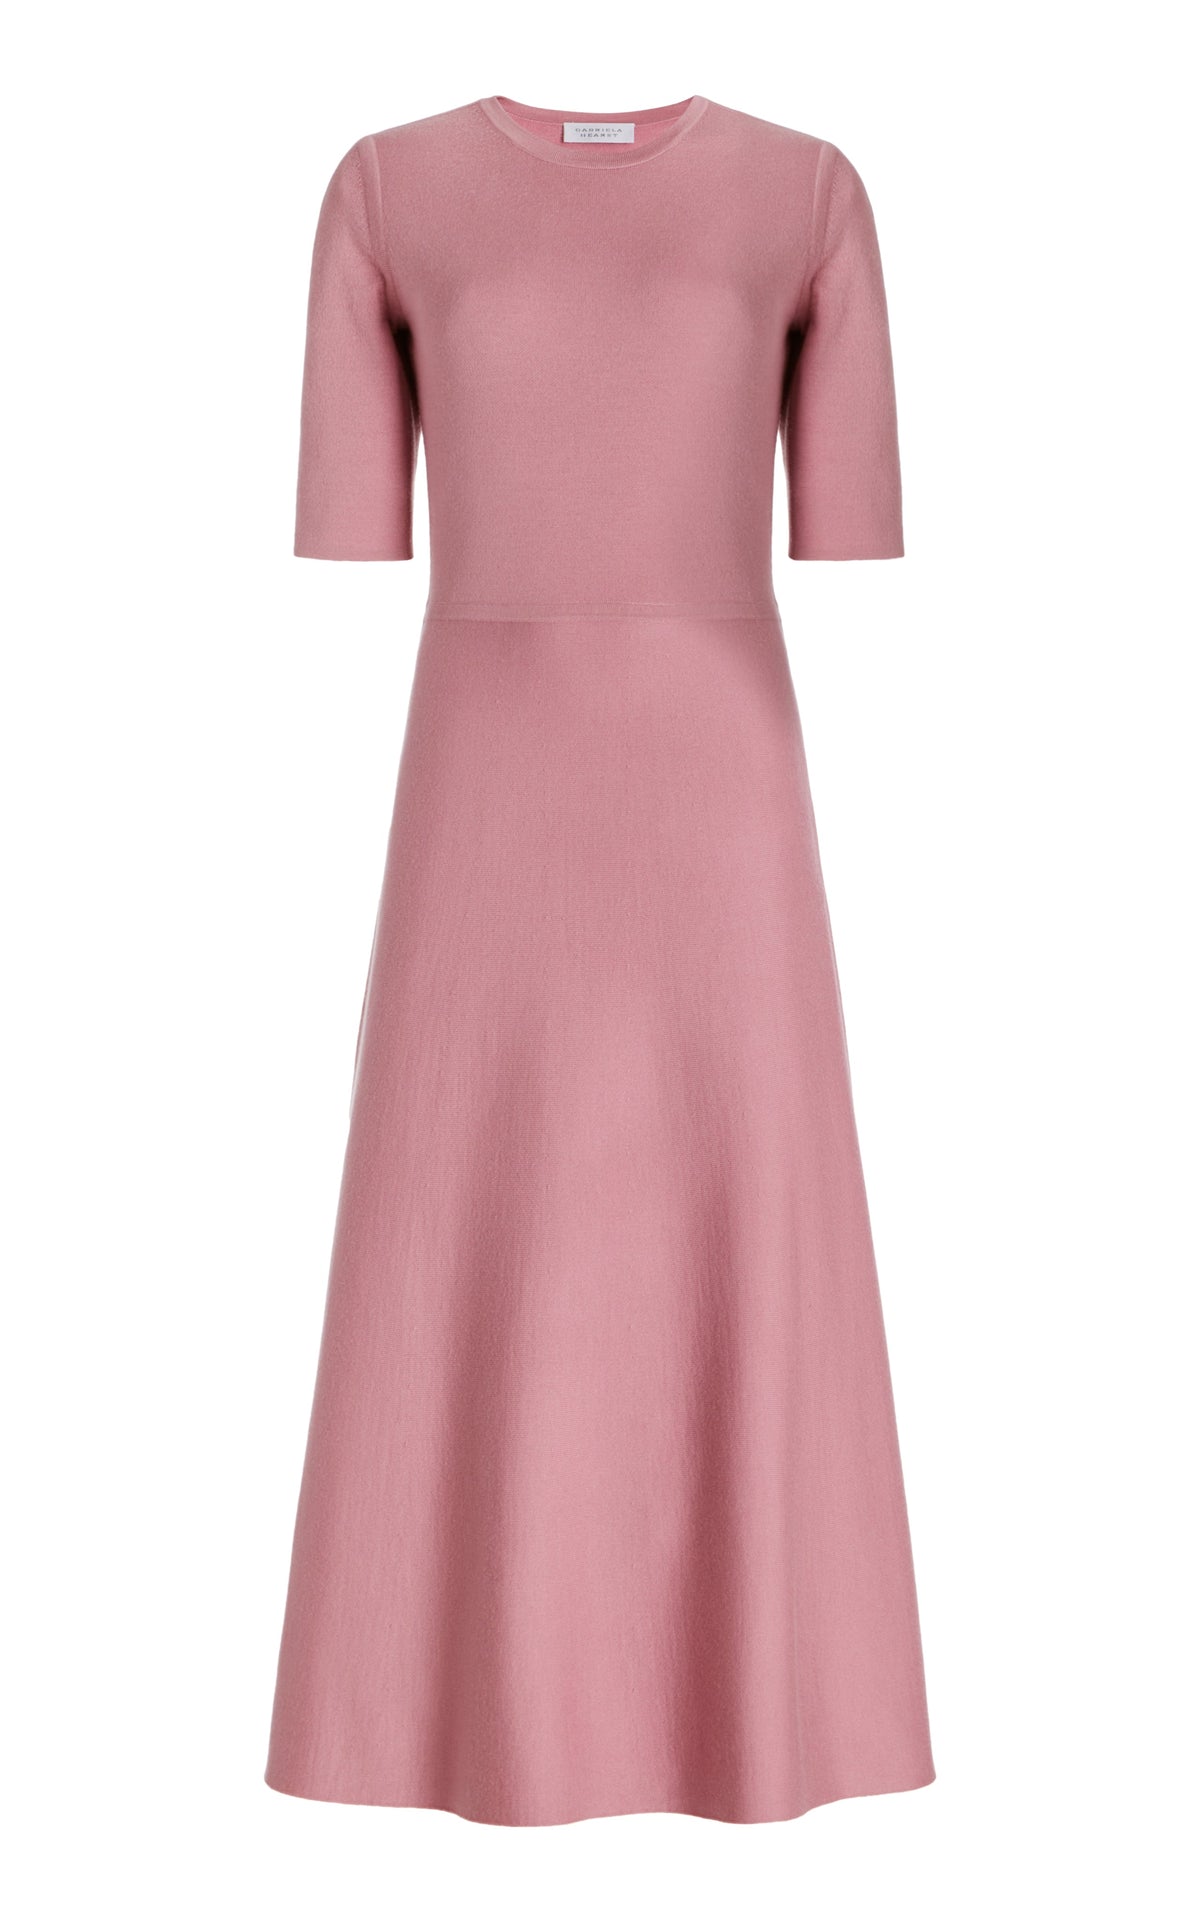 Seymore Knit Dress in Rose Quartz Merino Wool Cashmere